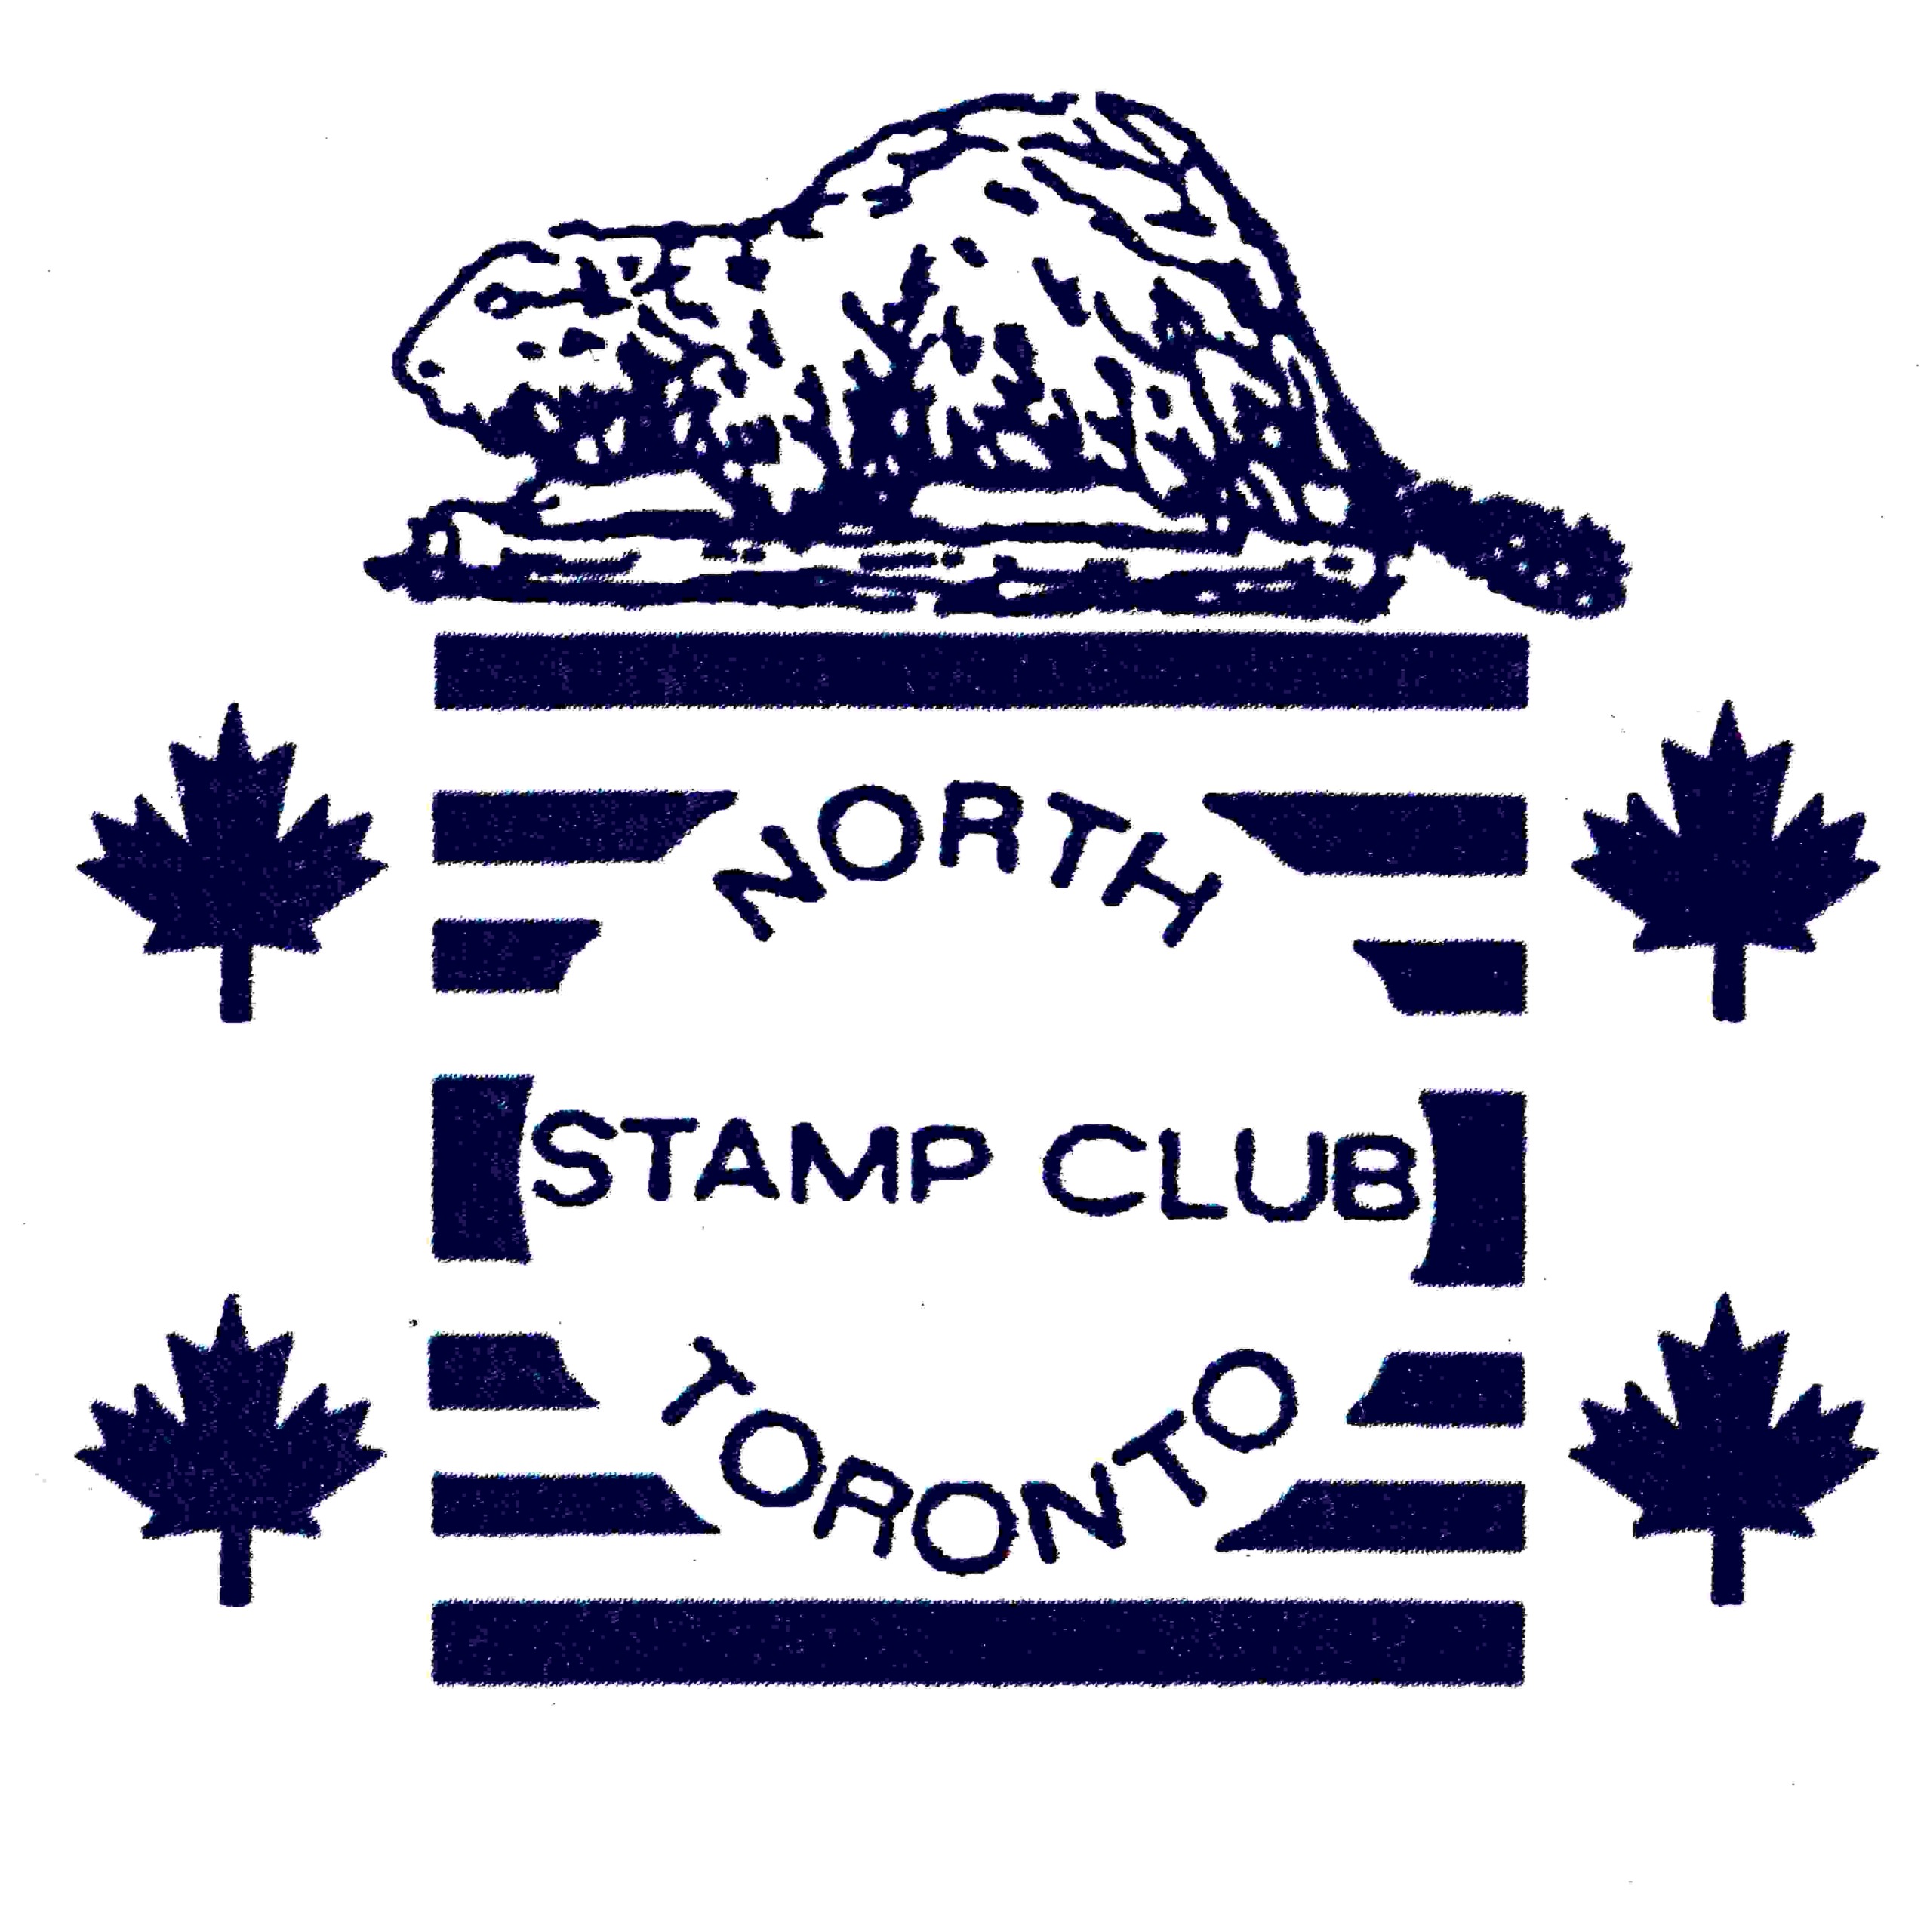 Spotlight on Societies: North Toronto Stamp Club